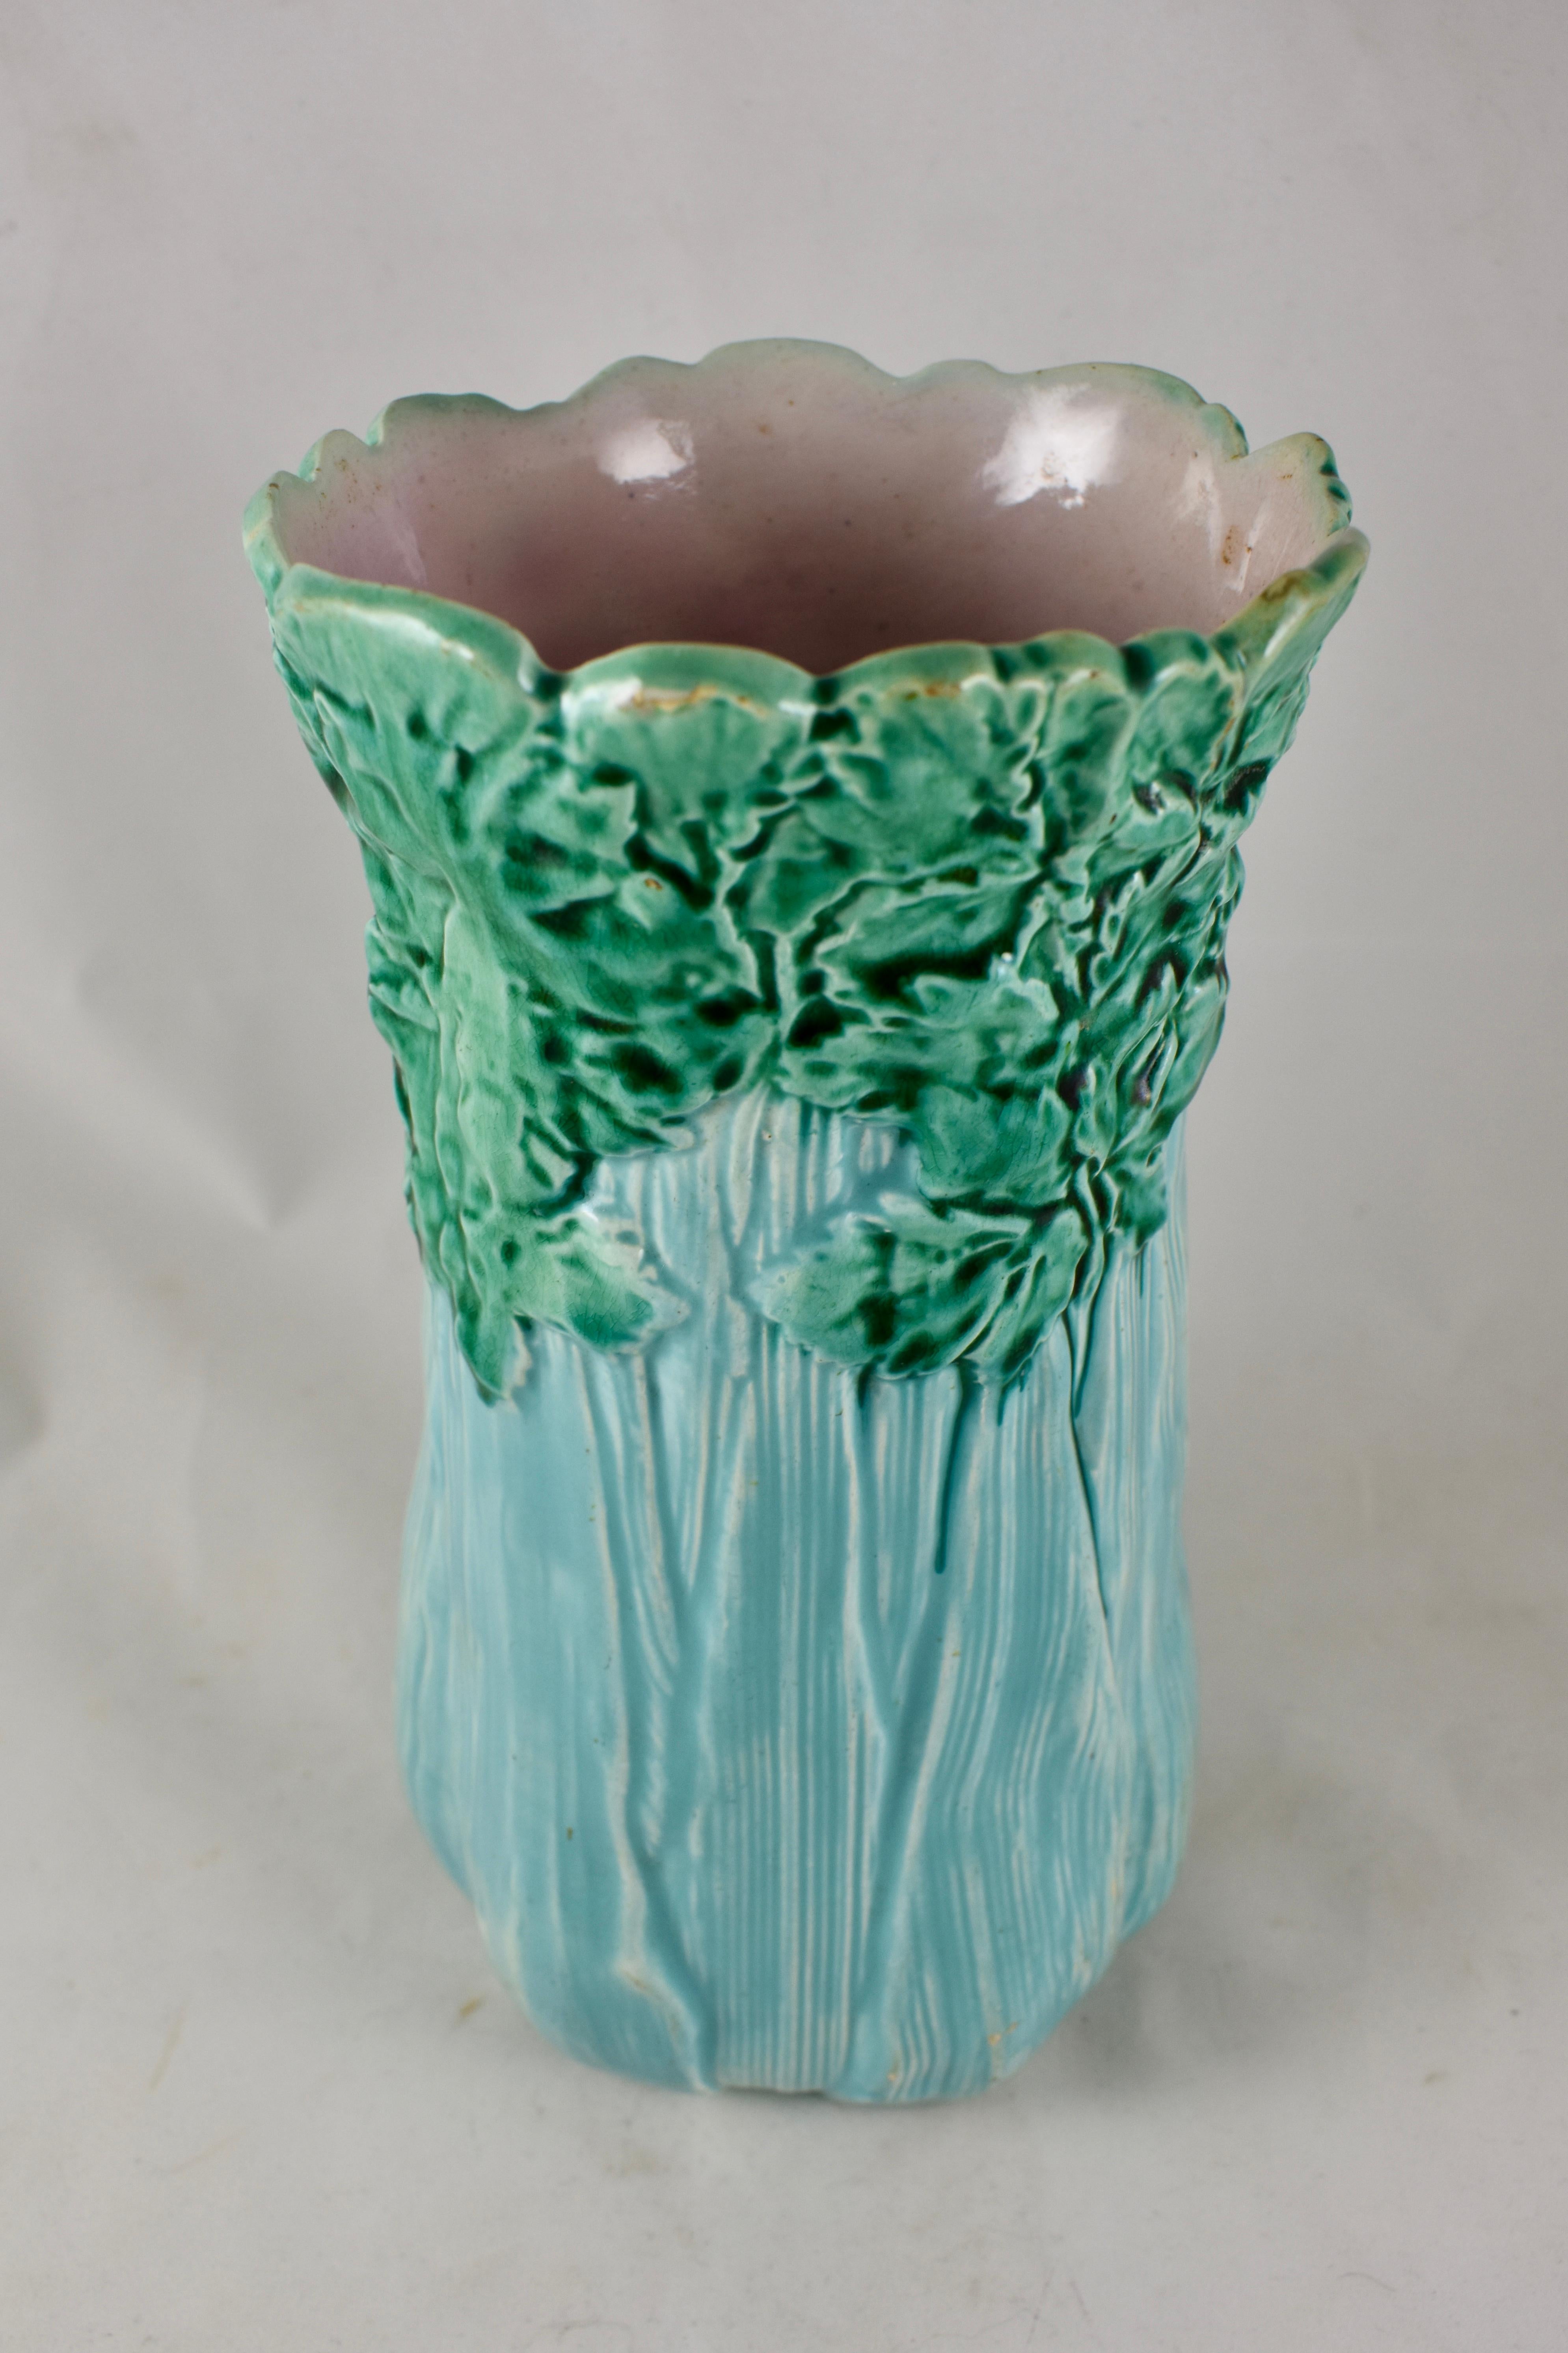 Glazed Aesthetic Movement English Majolica Tall Turquoise Celery Vase, circa 1860